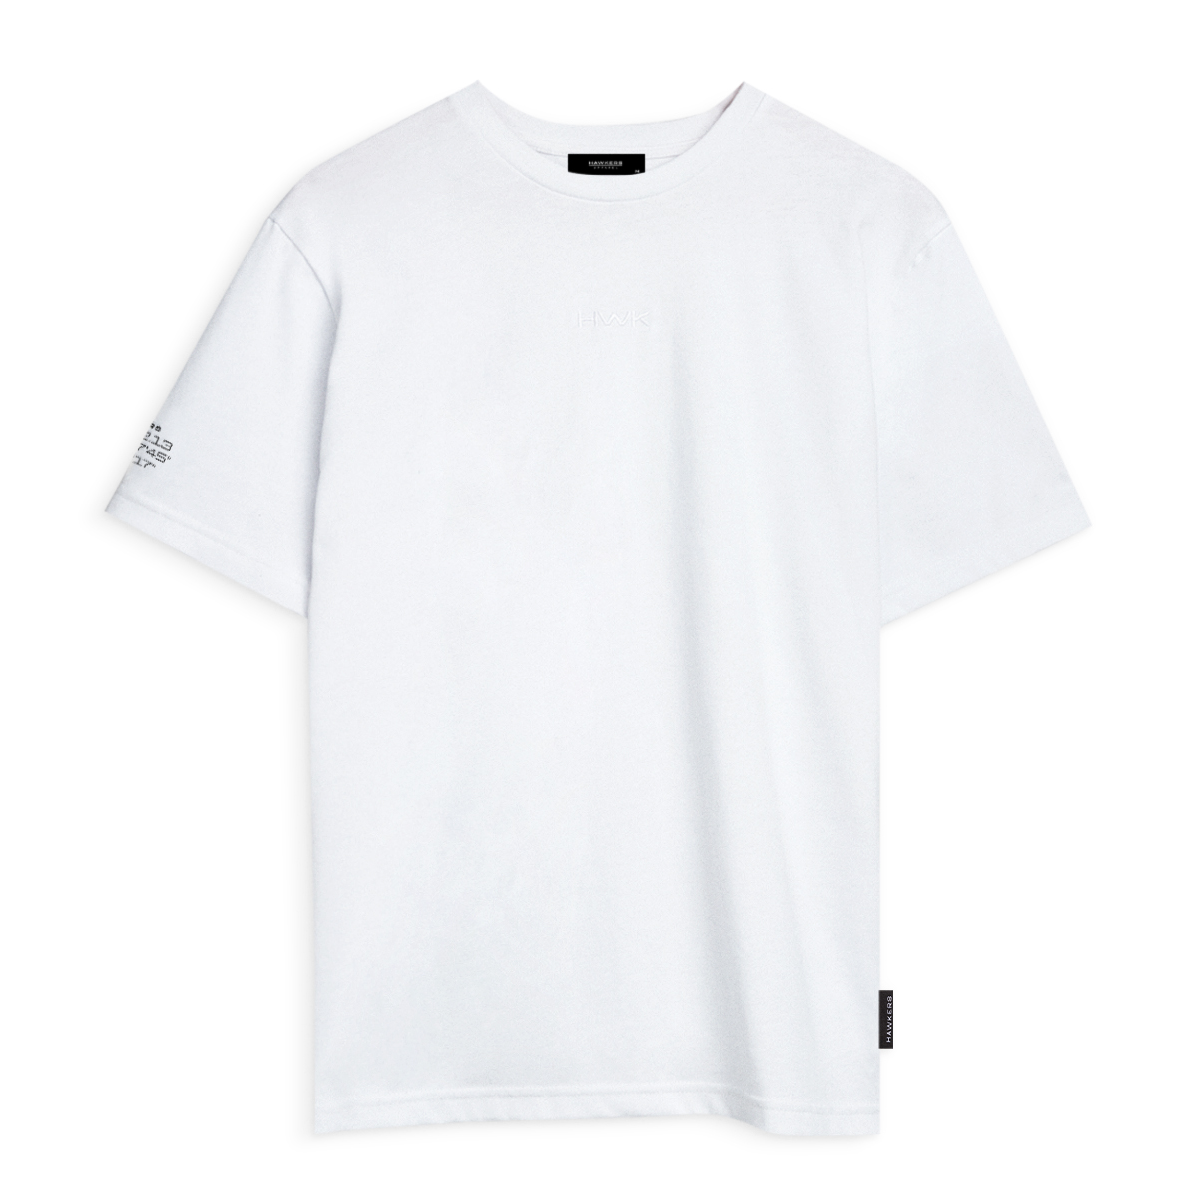 Lax T-shirt White (m)